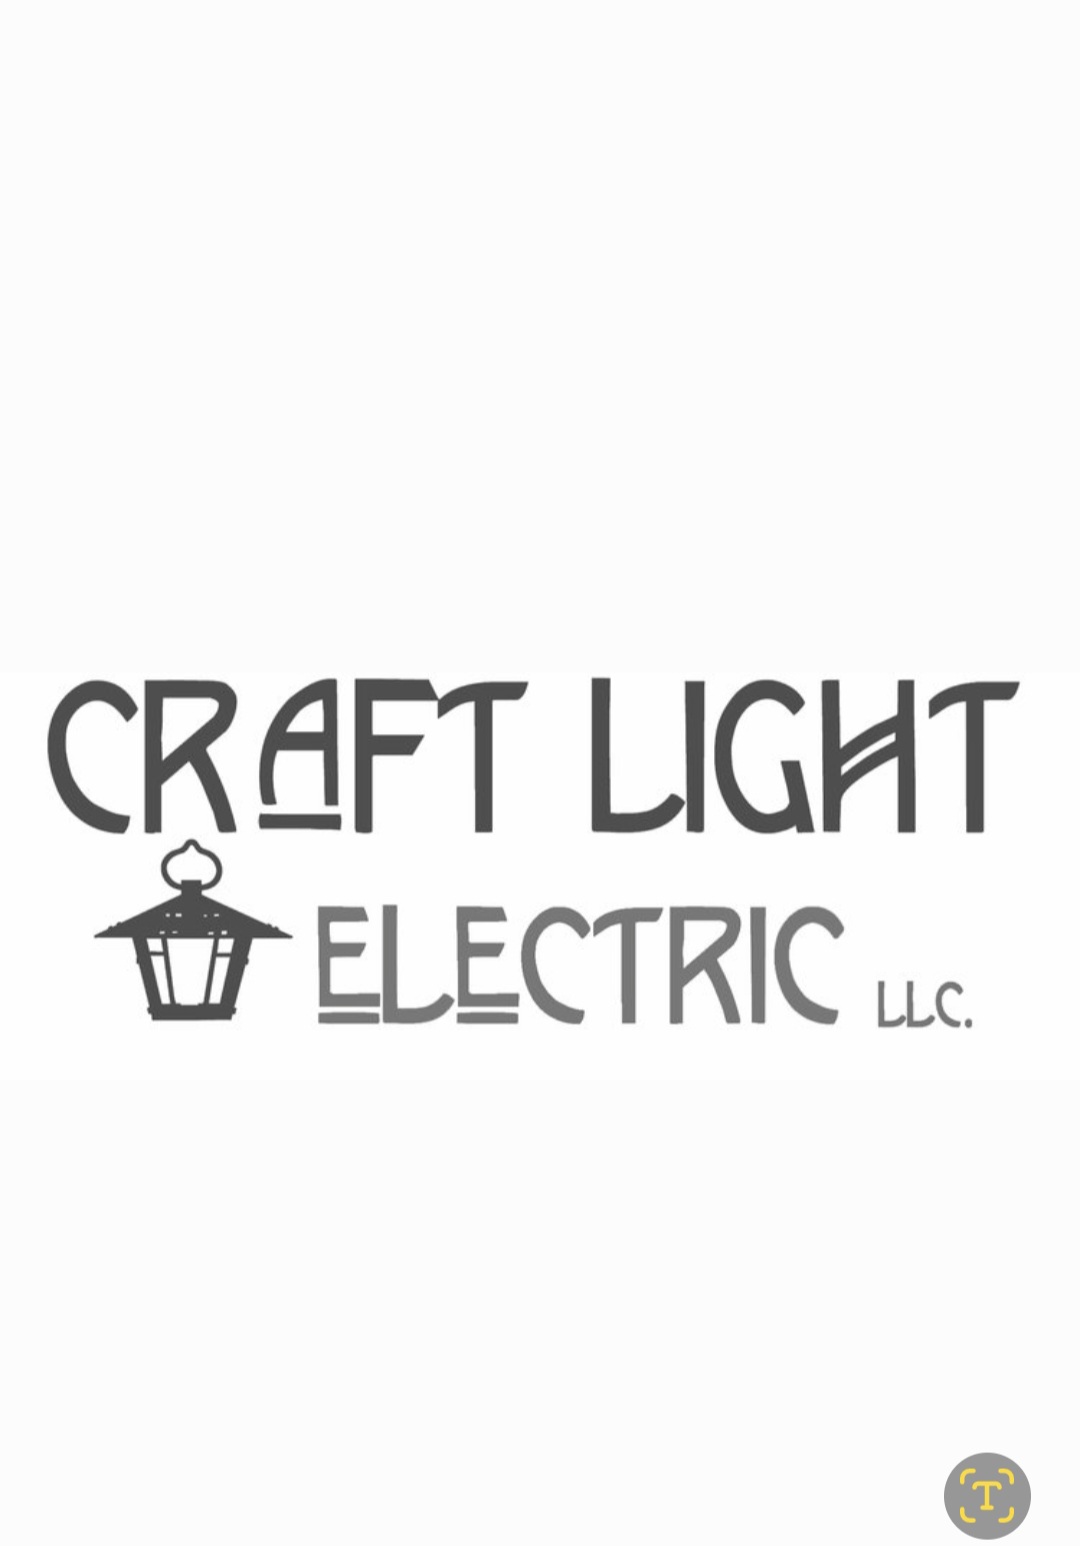 Craft Light Electric Logo